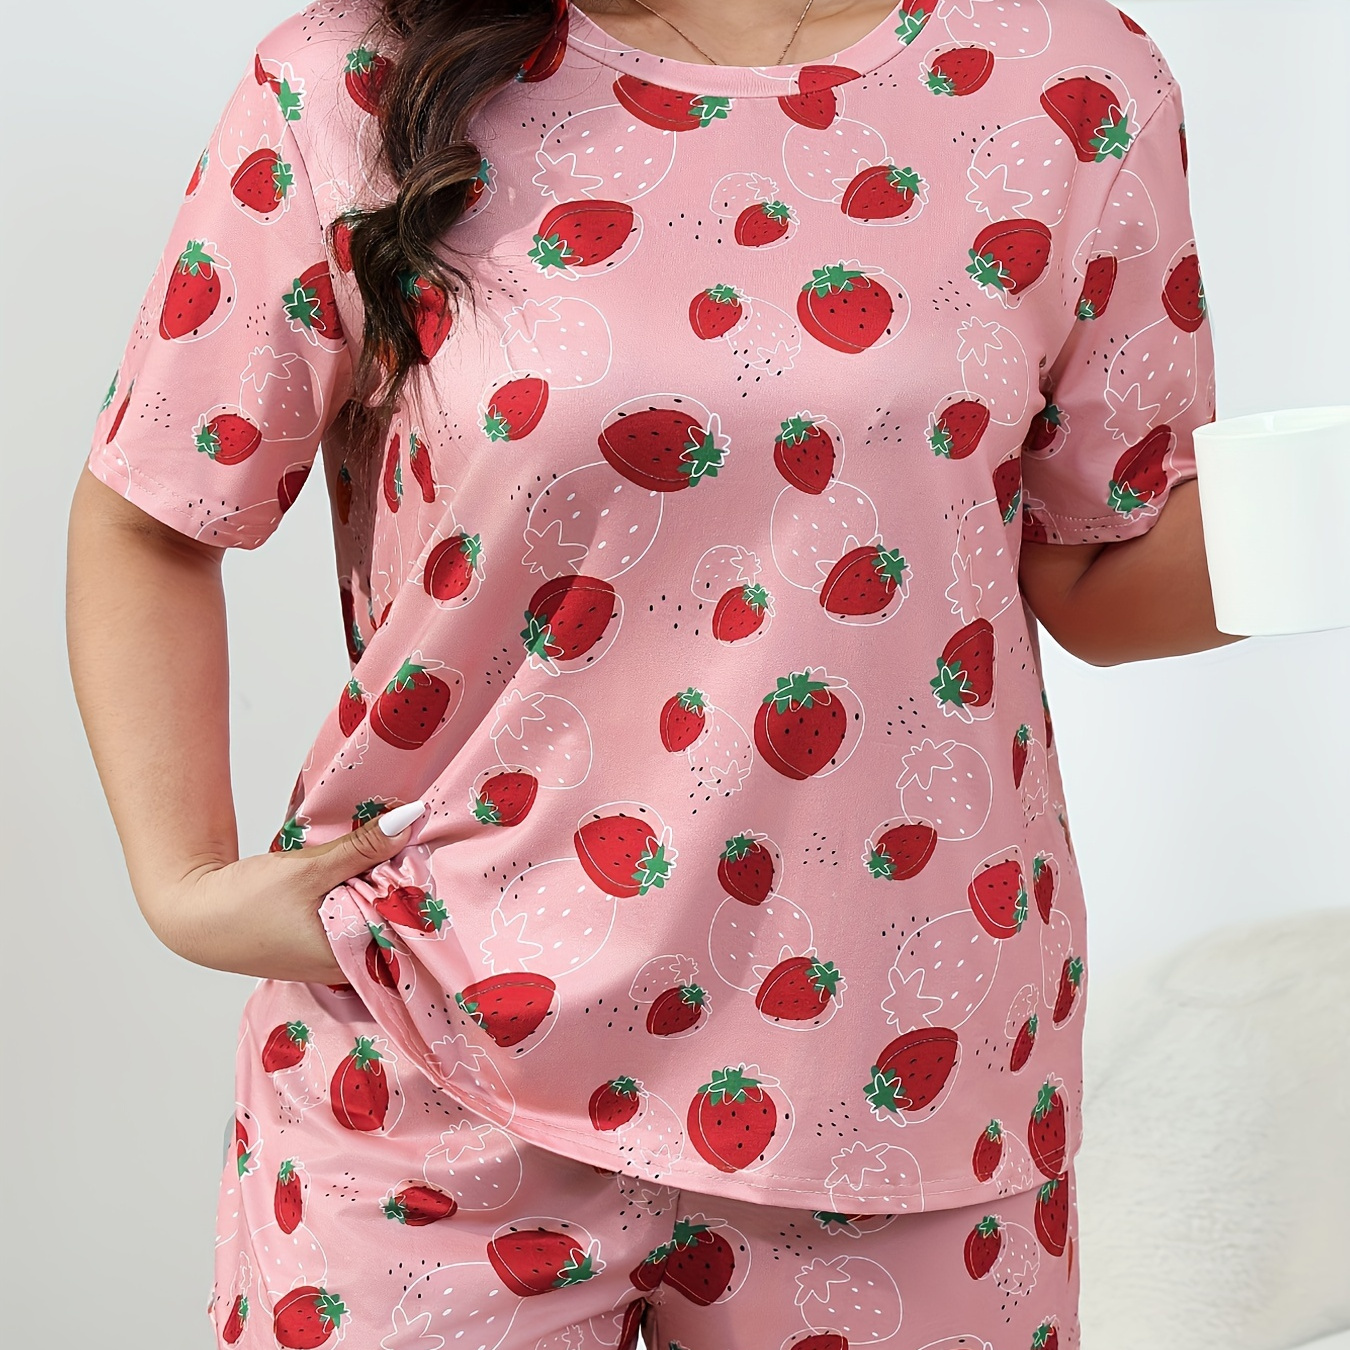 

Women's Cute Pajamas Set, Plus Size Strawberry Print Short Sleeve Tee & Shorts Lounge 2 Piece Set